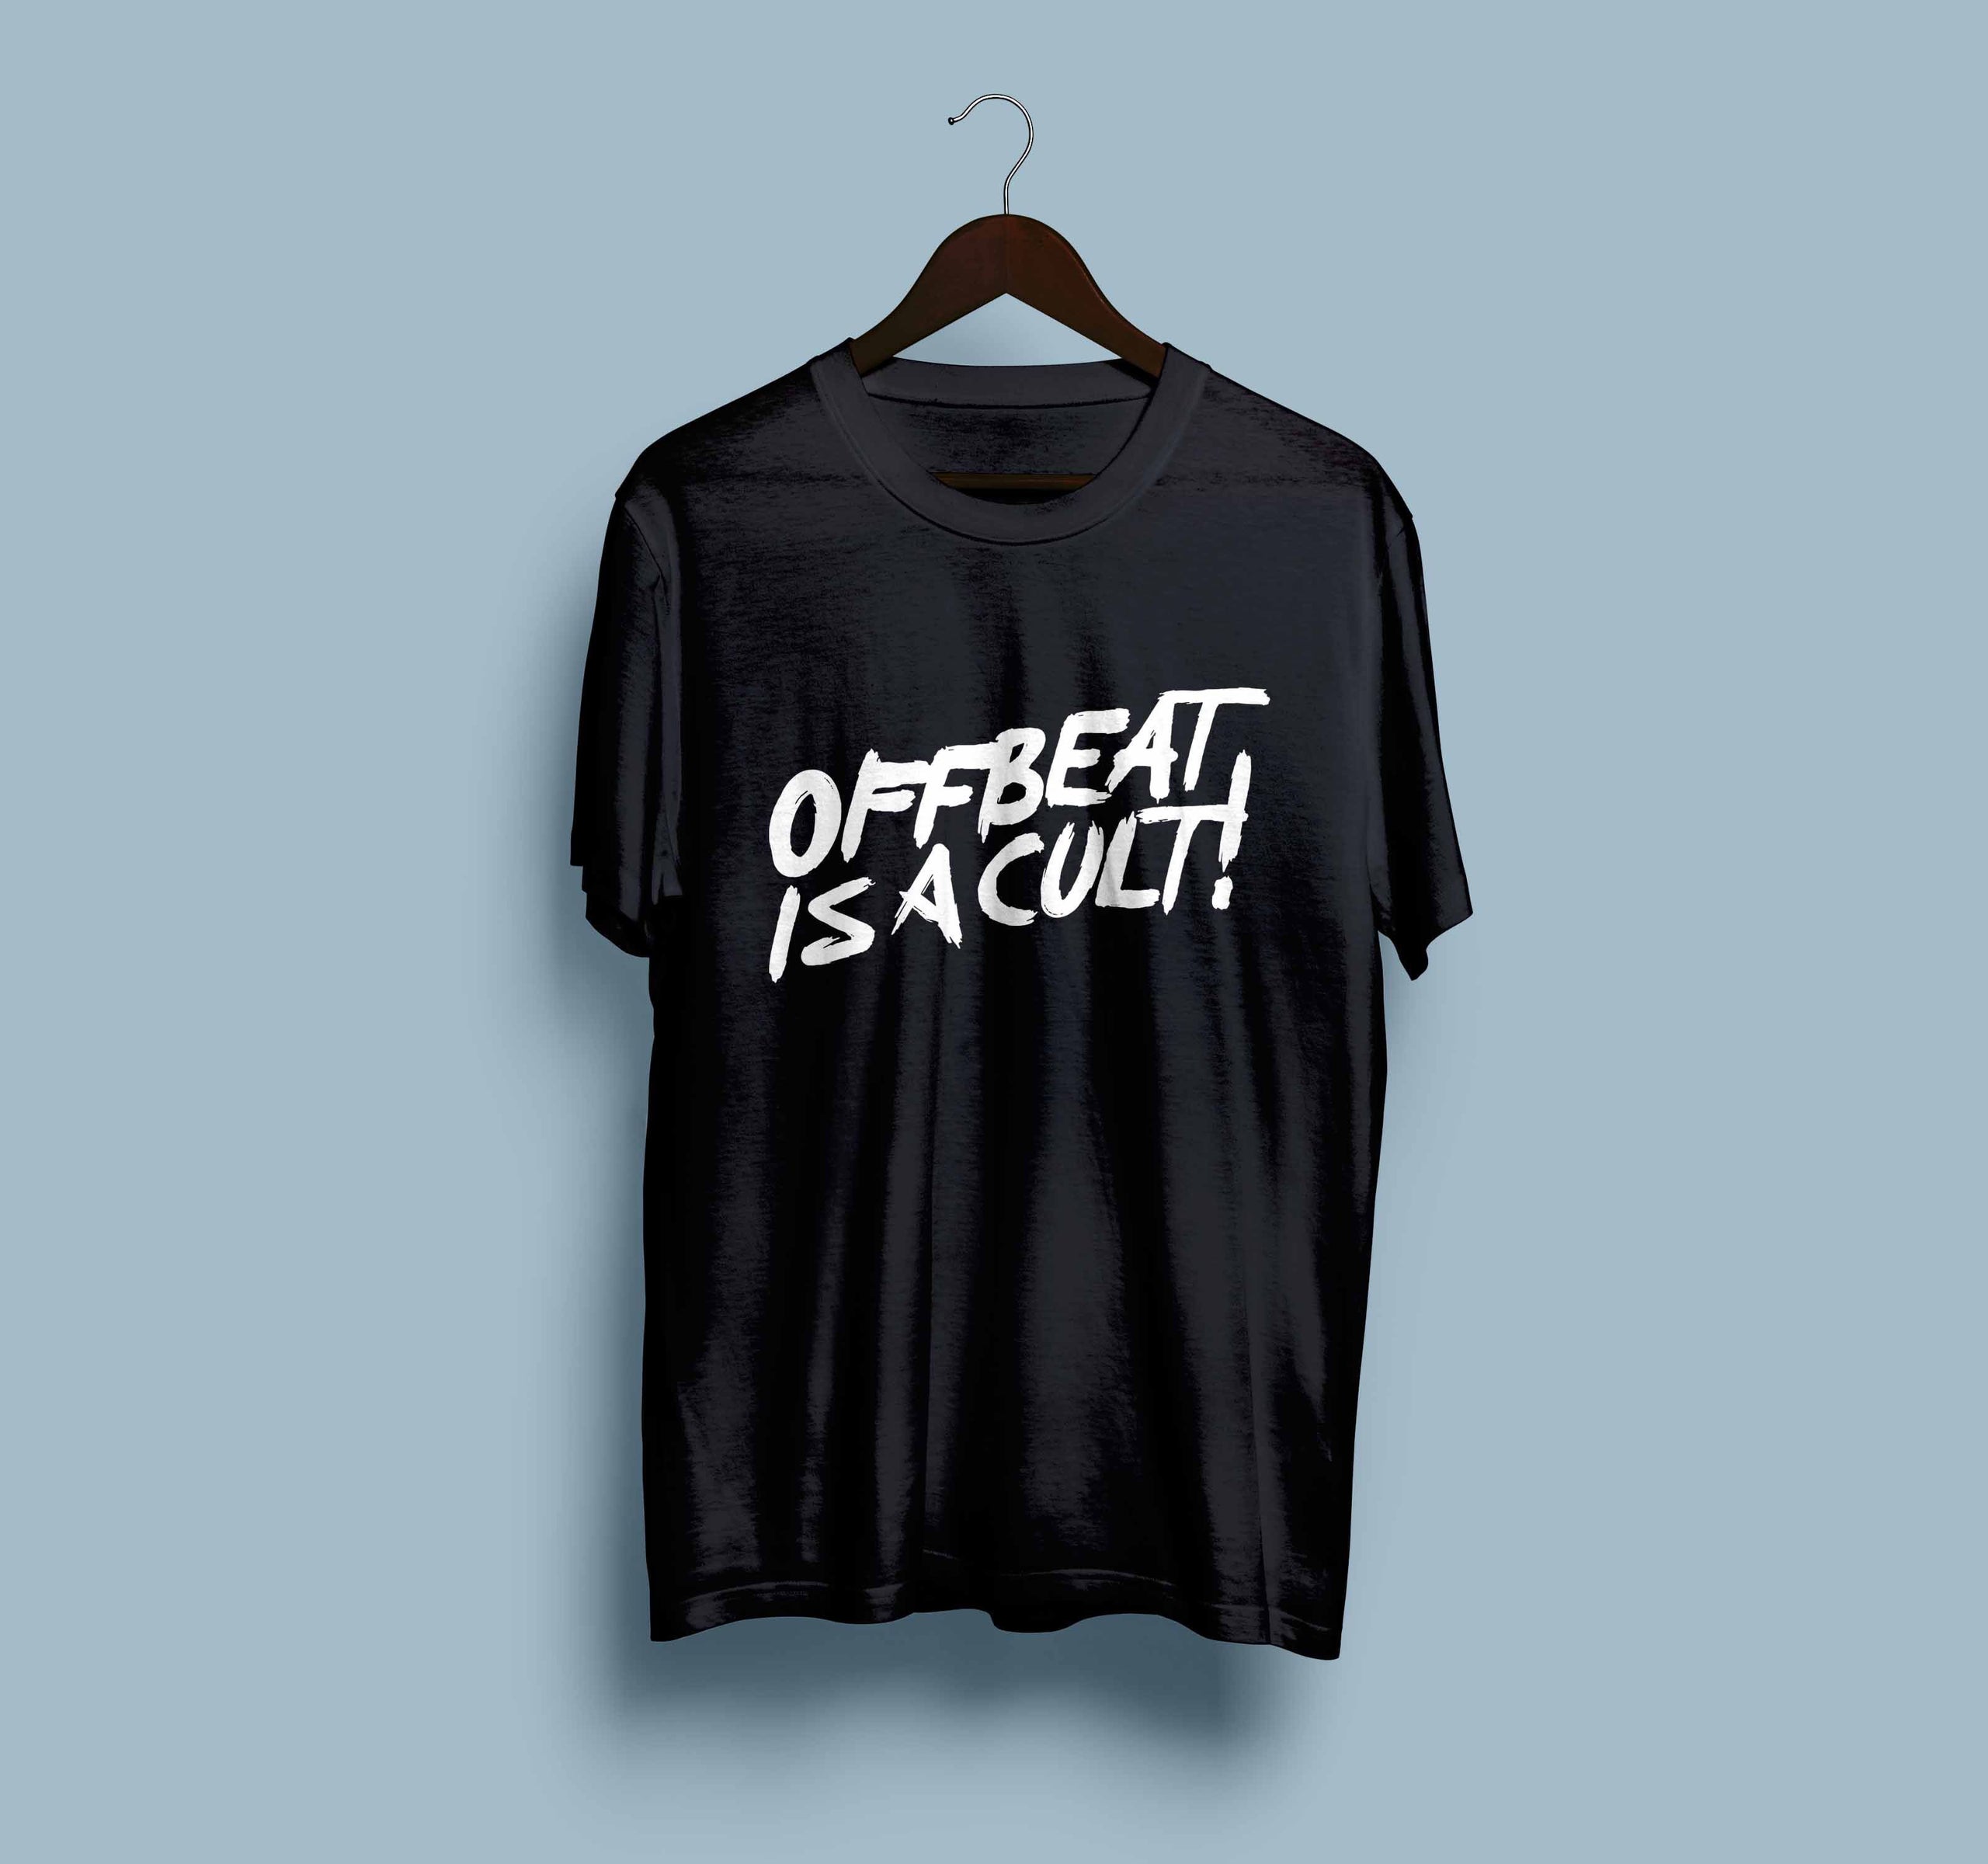 OffBeat Is A Cult! T-Shirt